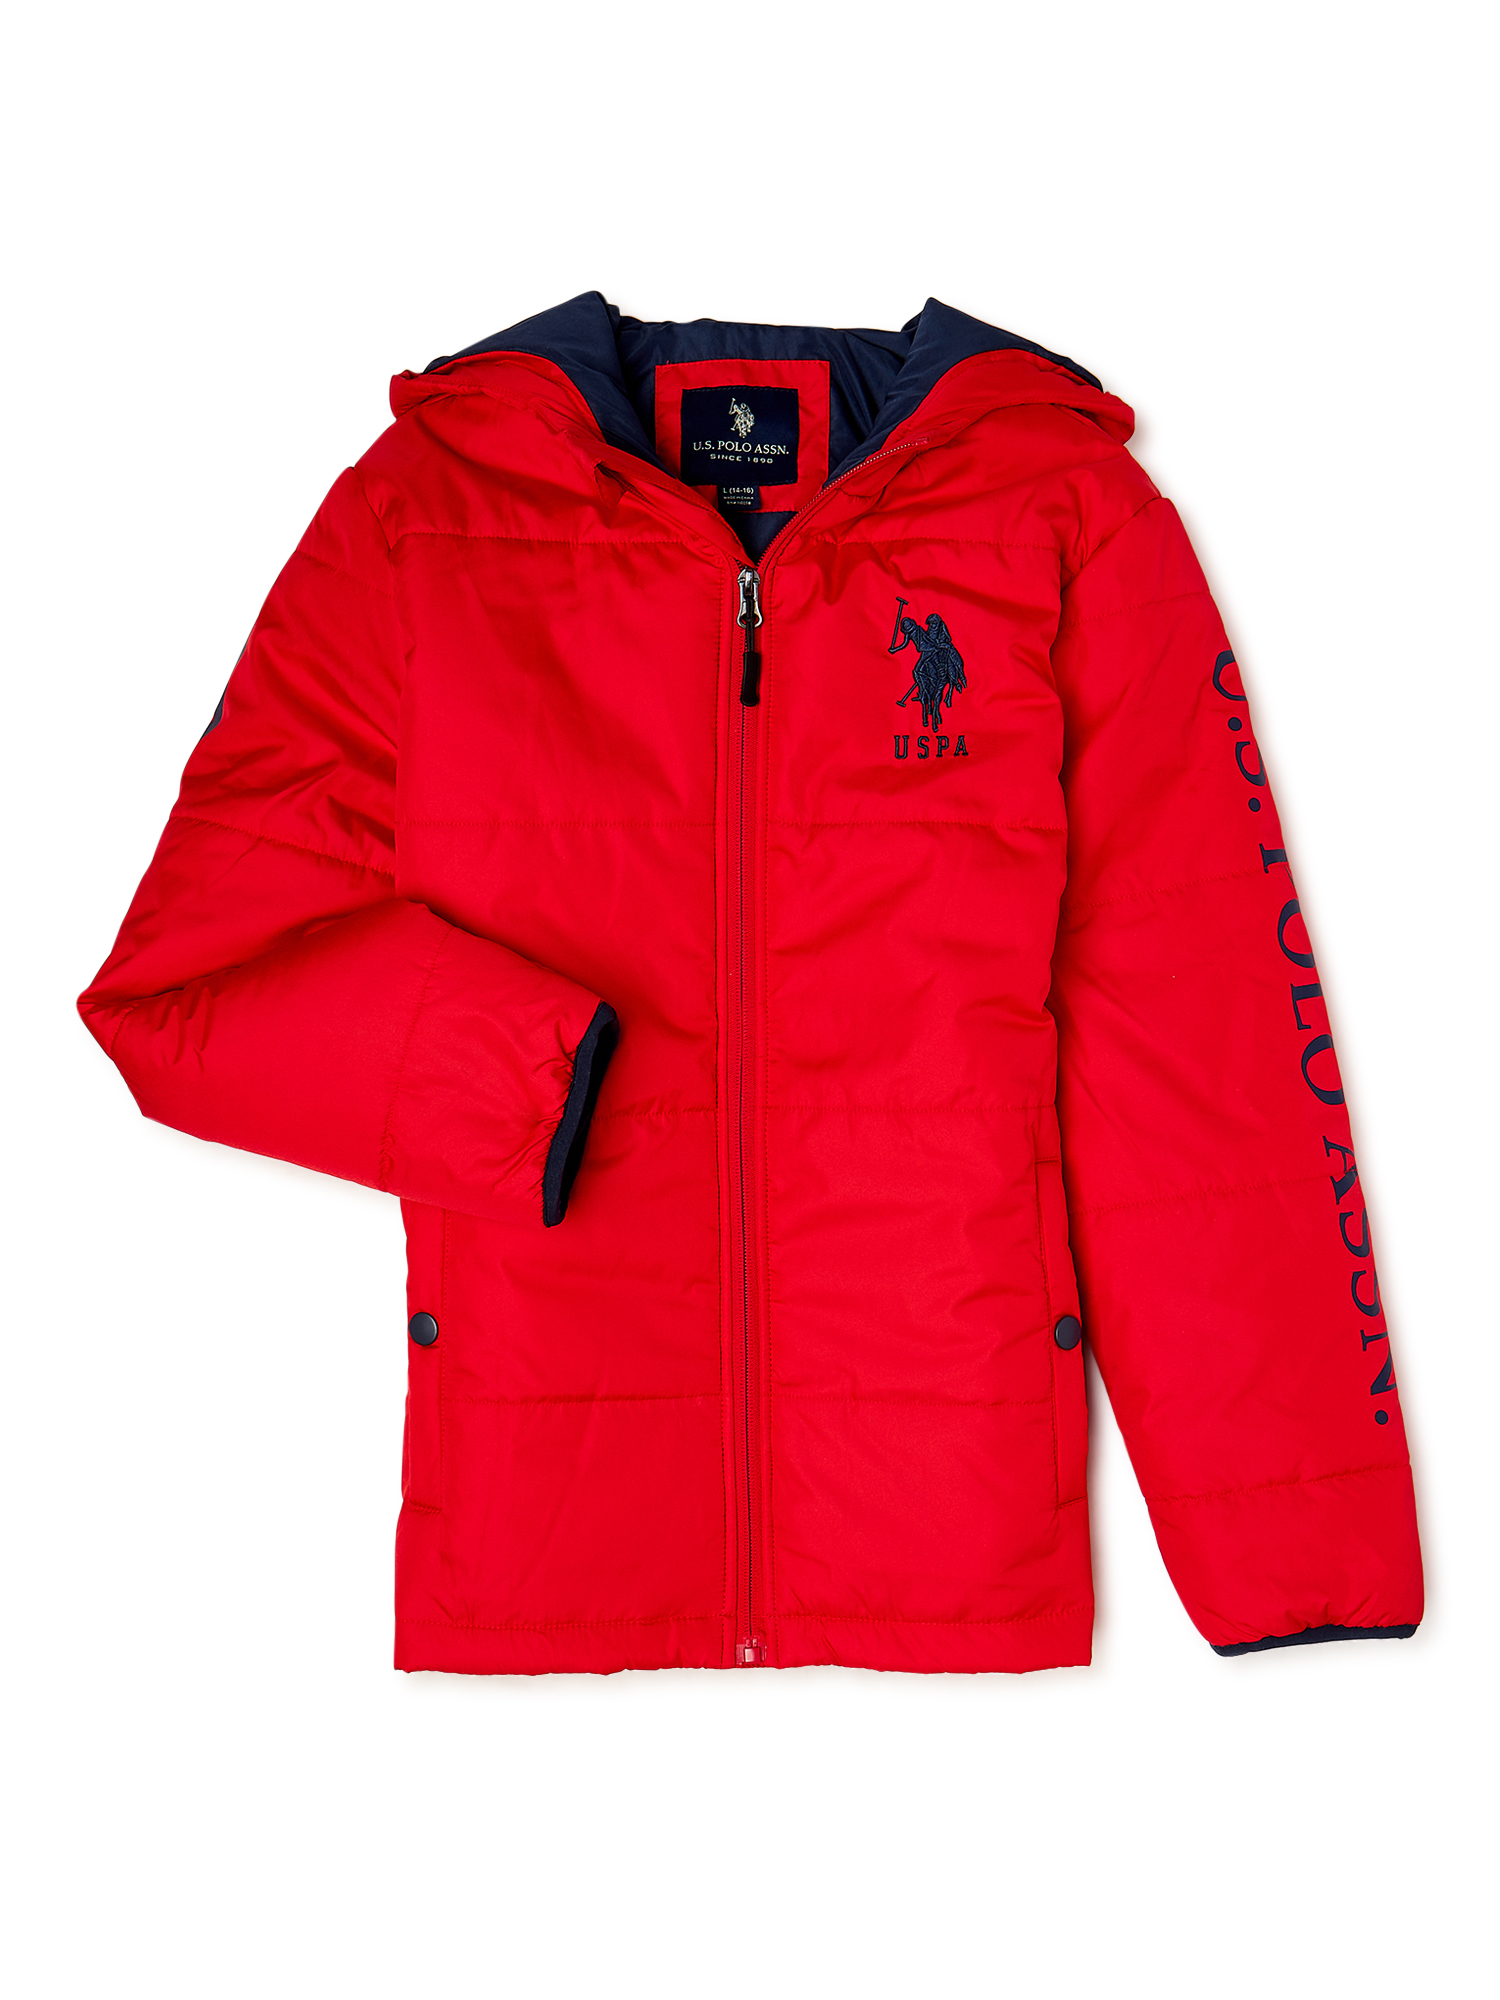 U.S. Polo Assn. Boys’ Logo Puffer Jacket, Sizes 8-20 - image 1 of 5